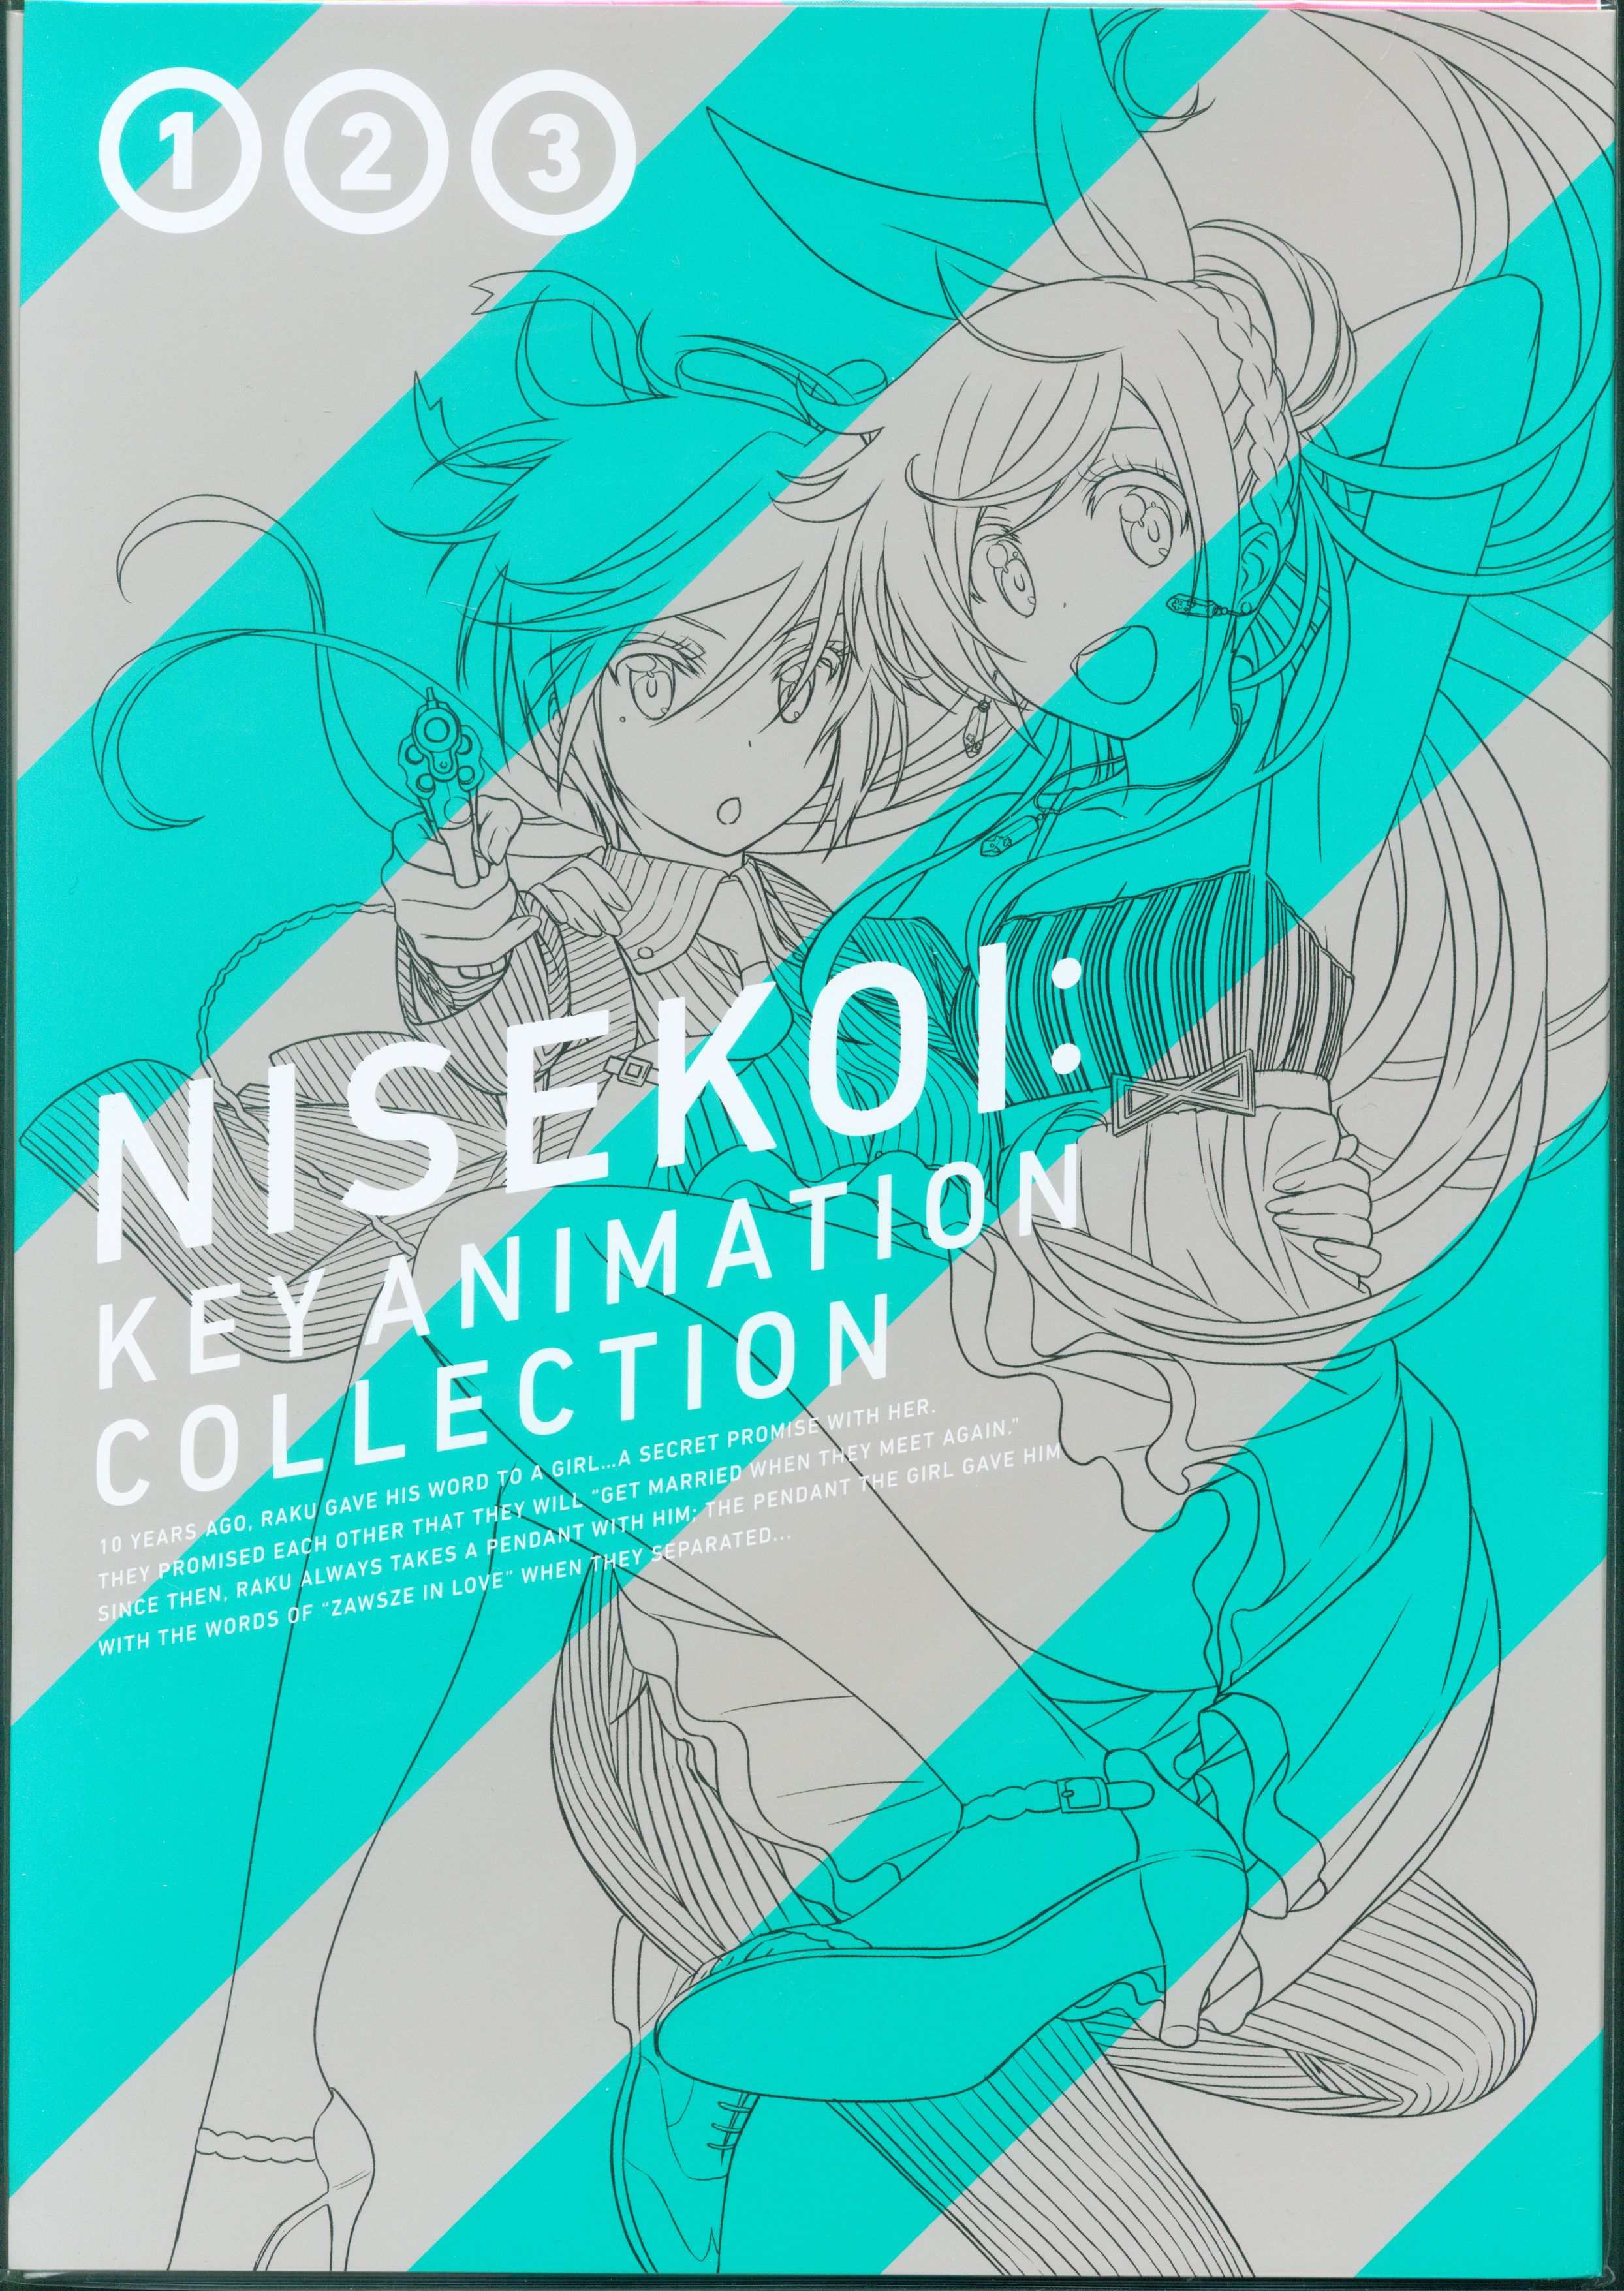 Nisekoi ニセコイ Key Animation Collection 複製原画セット Vol 1 Vol 2 Mandarake Online Shop